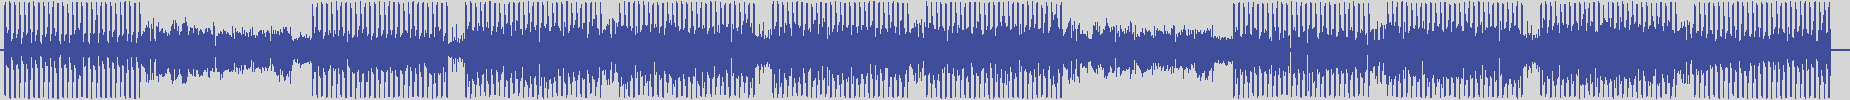 nf_boyz_records [NFY052] Plastiko - Chunky Bits [Exotherik Mix] audio wave form